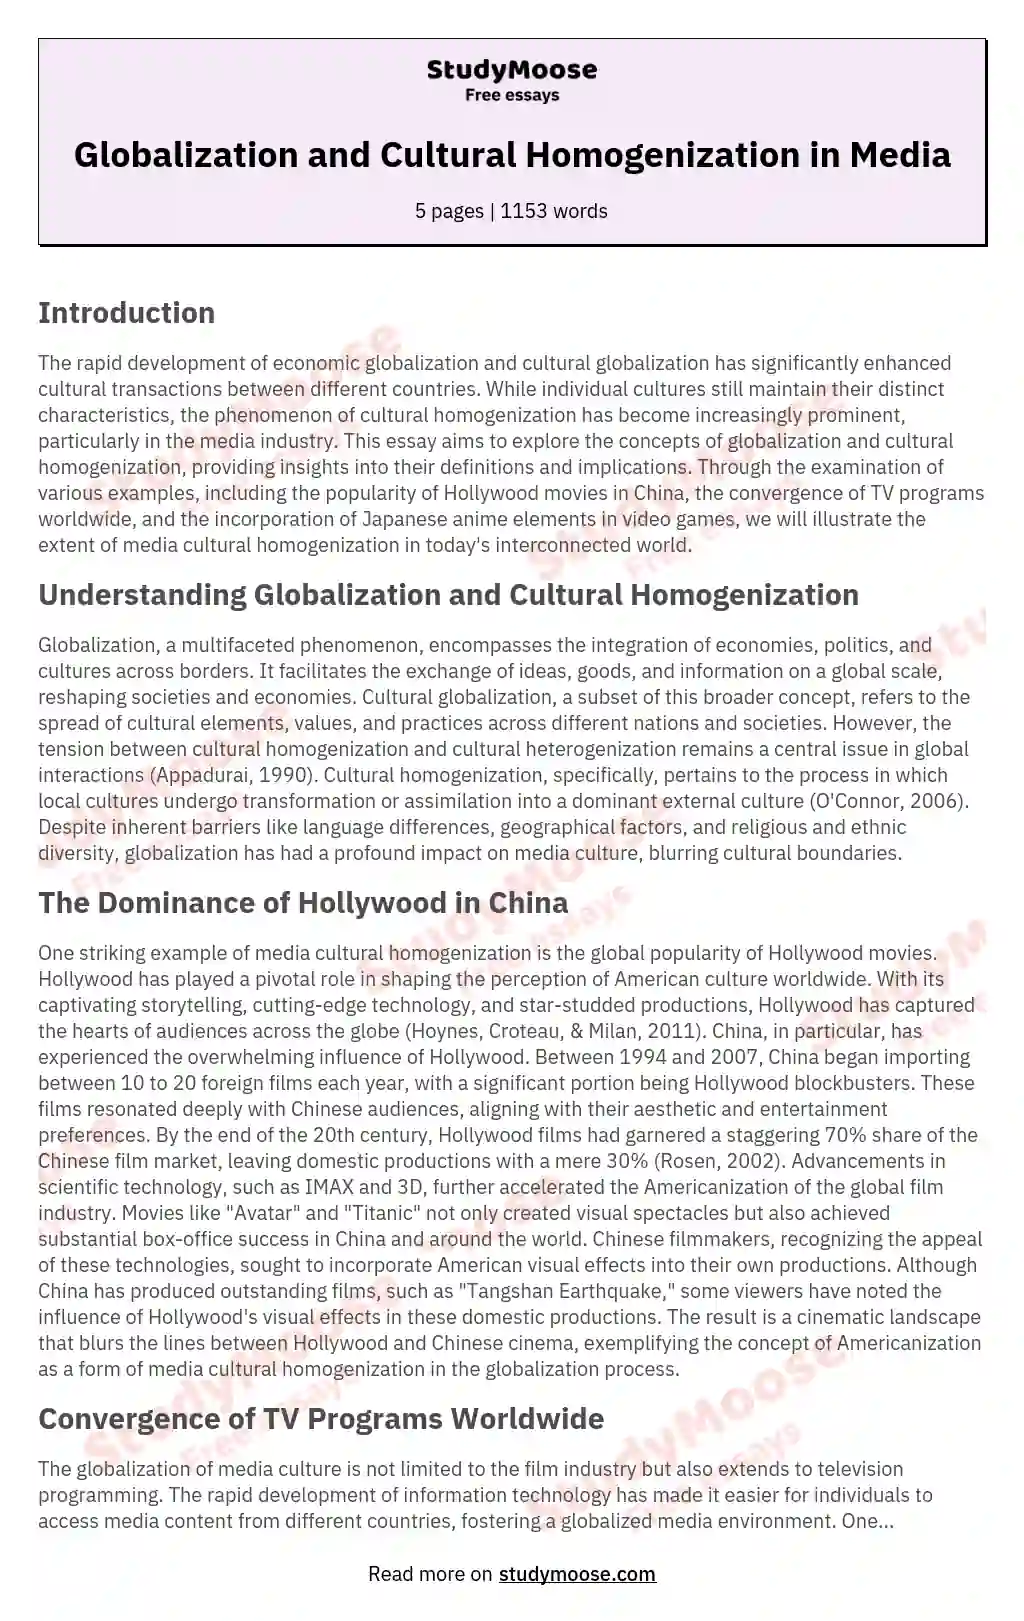 Globalization and Cultural Homogenization in Media essay